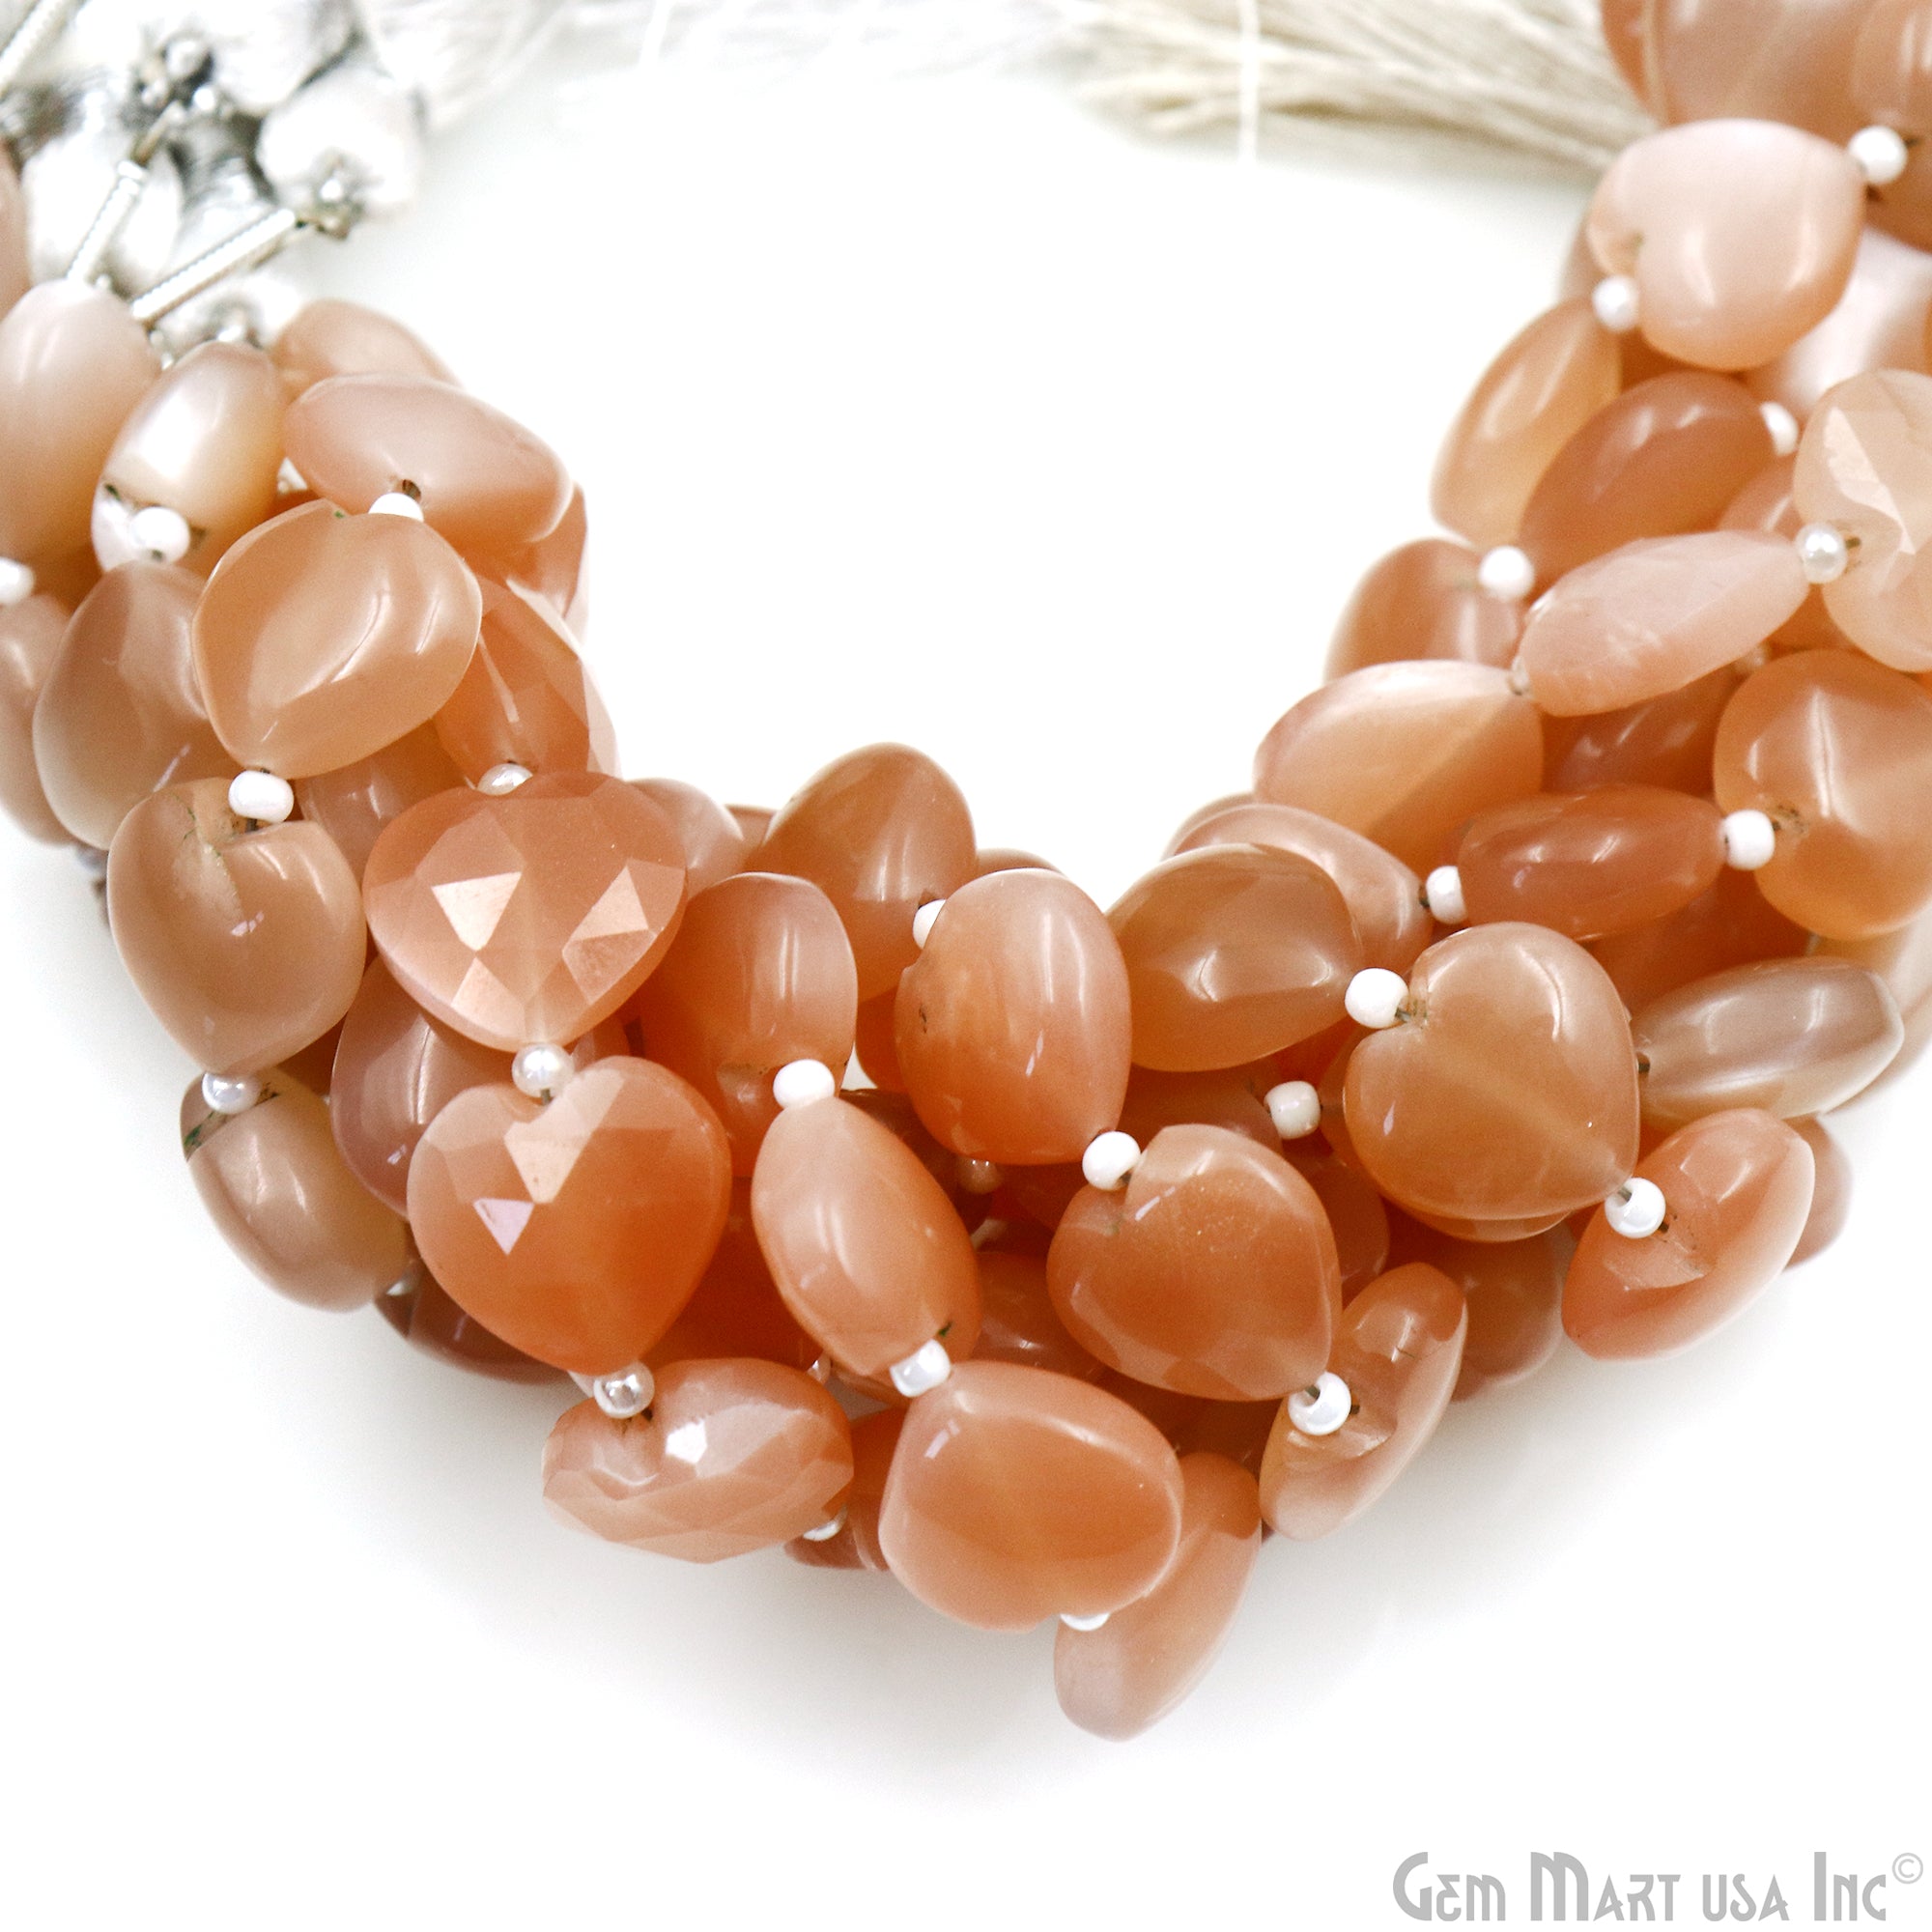 Peach Moonstone Heart Shape Cabochon Beads 10mm Gemstone 7 Inch Strands Briolette Drops